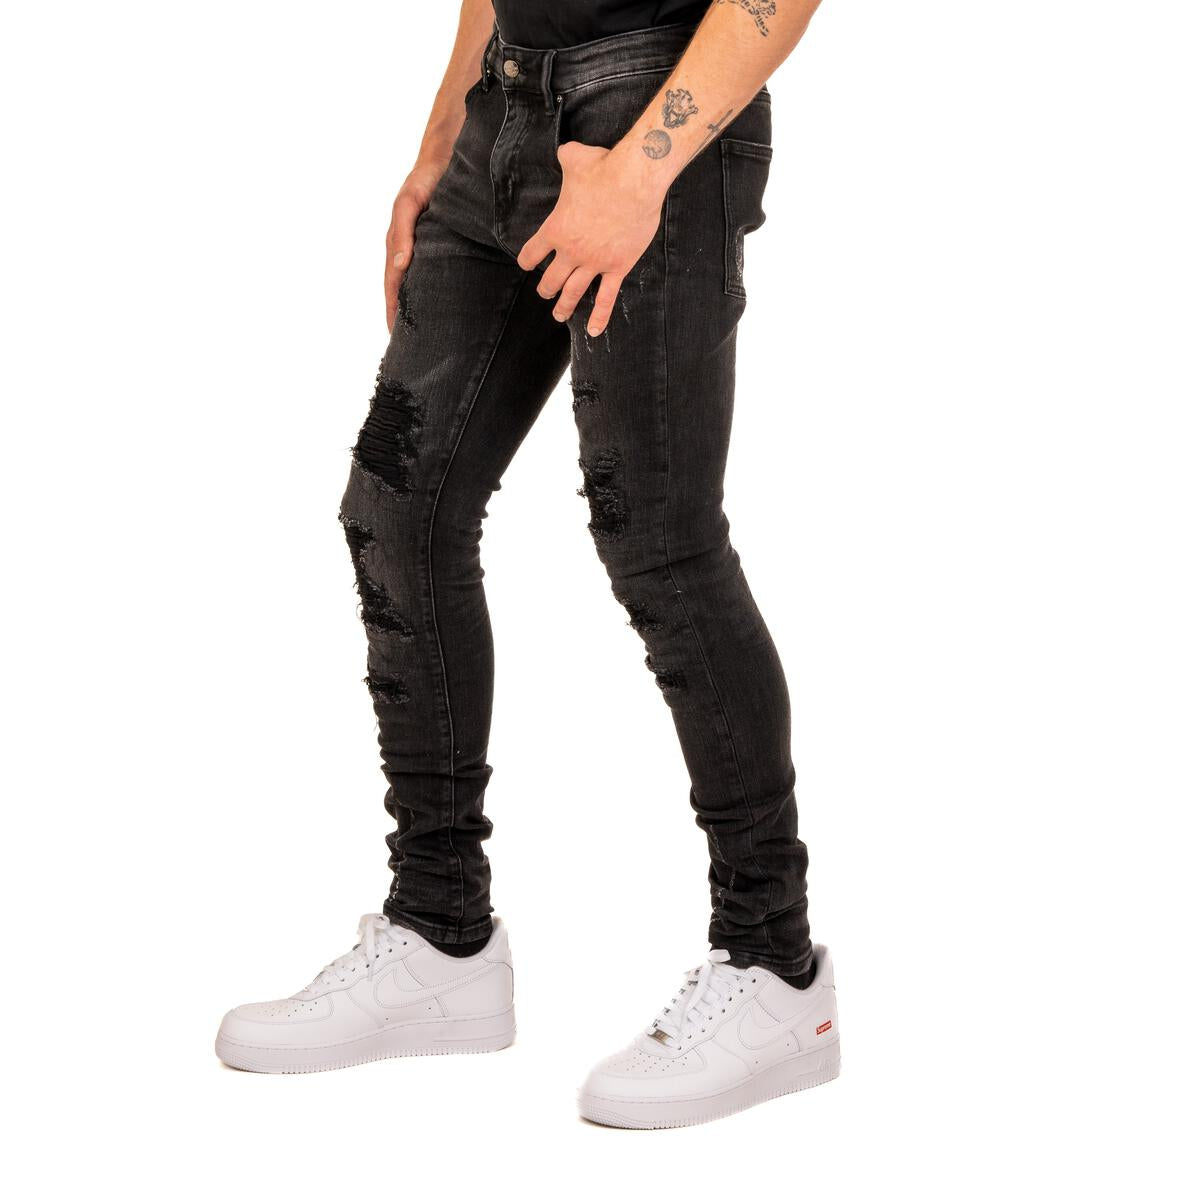 ESNTL LAB - Hydro Jeans (Grey/Black)